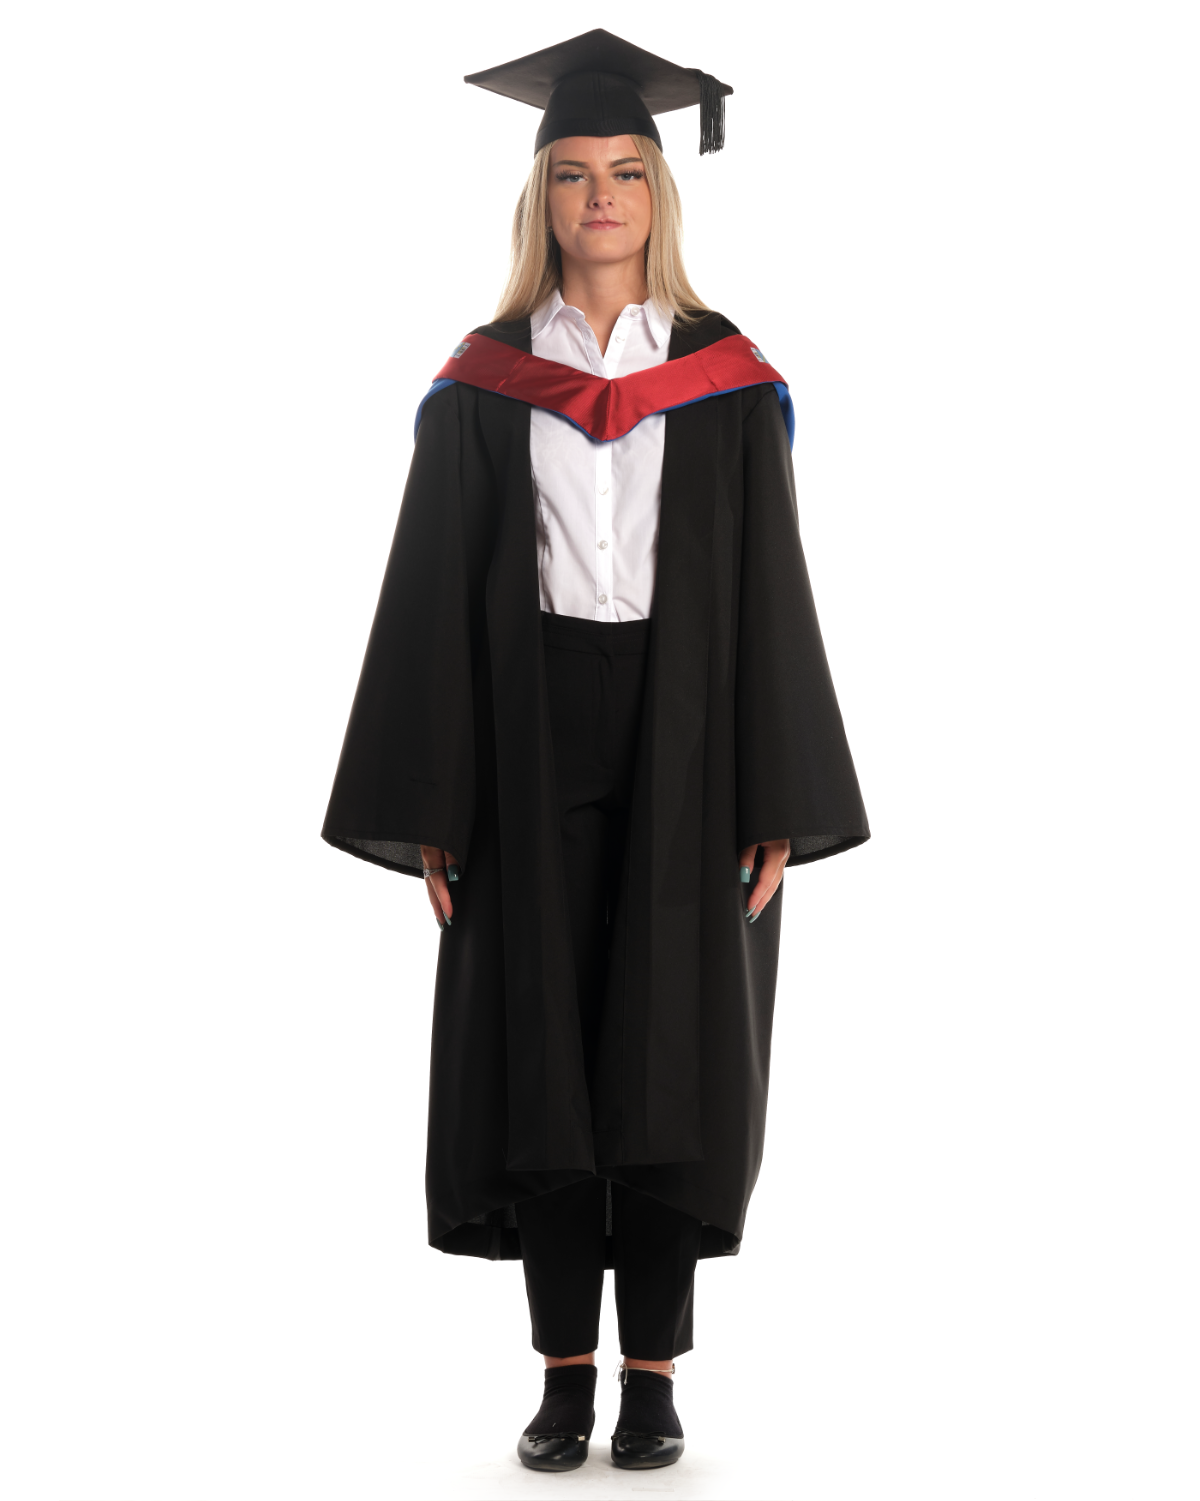 Aston University | Master of Philosophy Gown, Cap and Hood Set